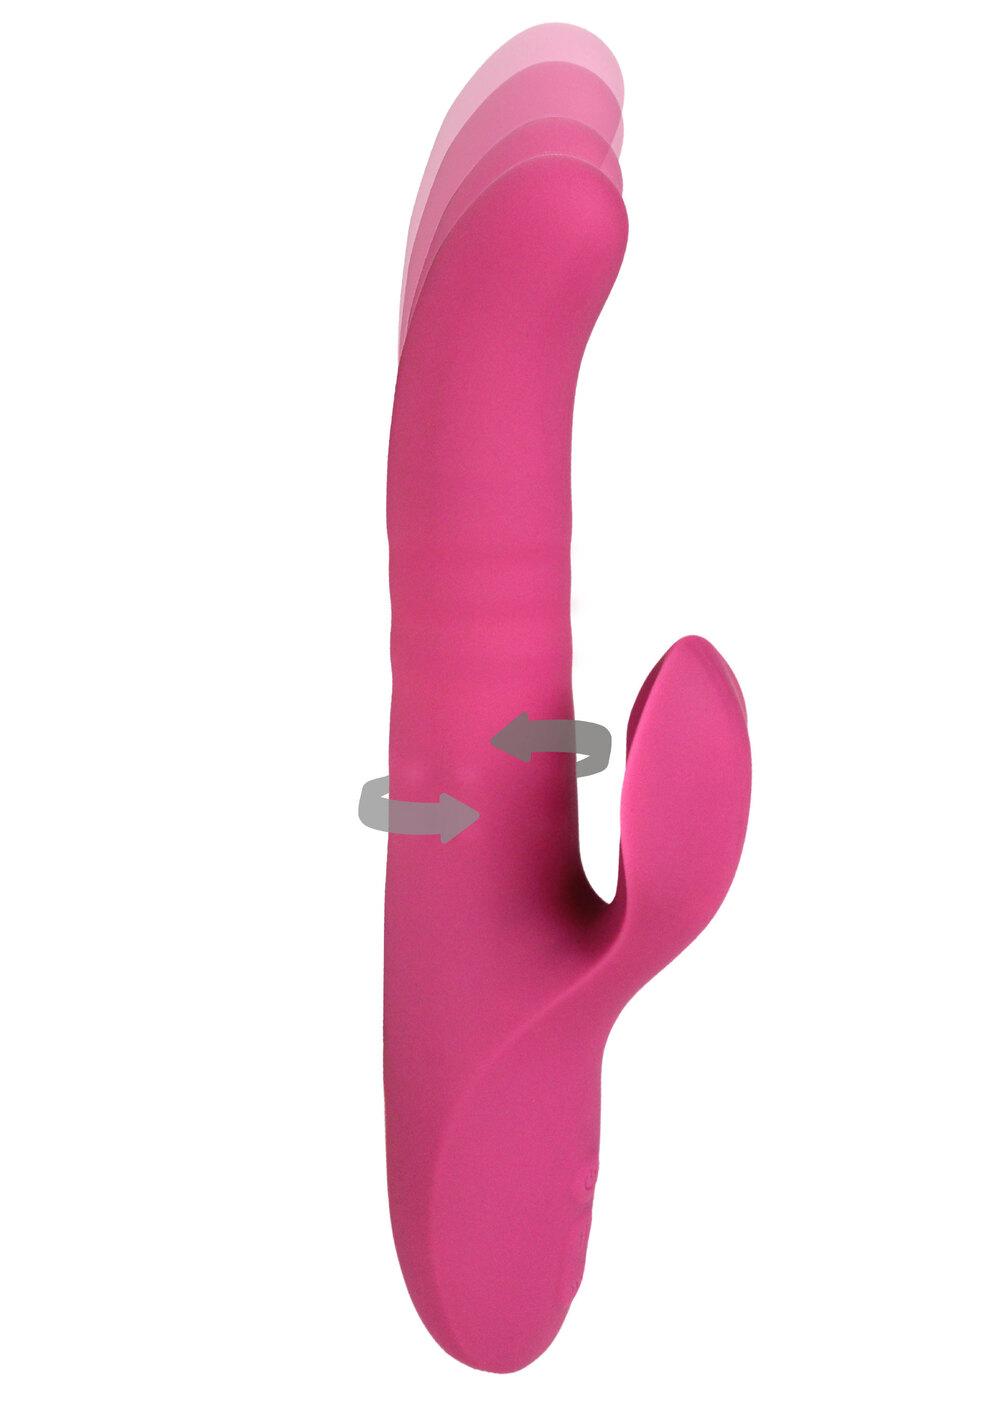 ToyJoy Venus Thrusting Rotating Vibe Pink